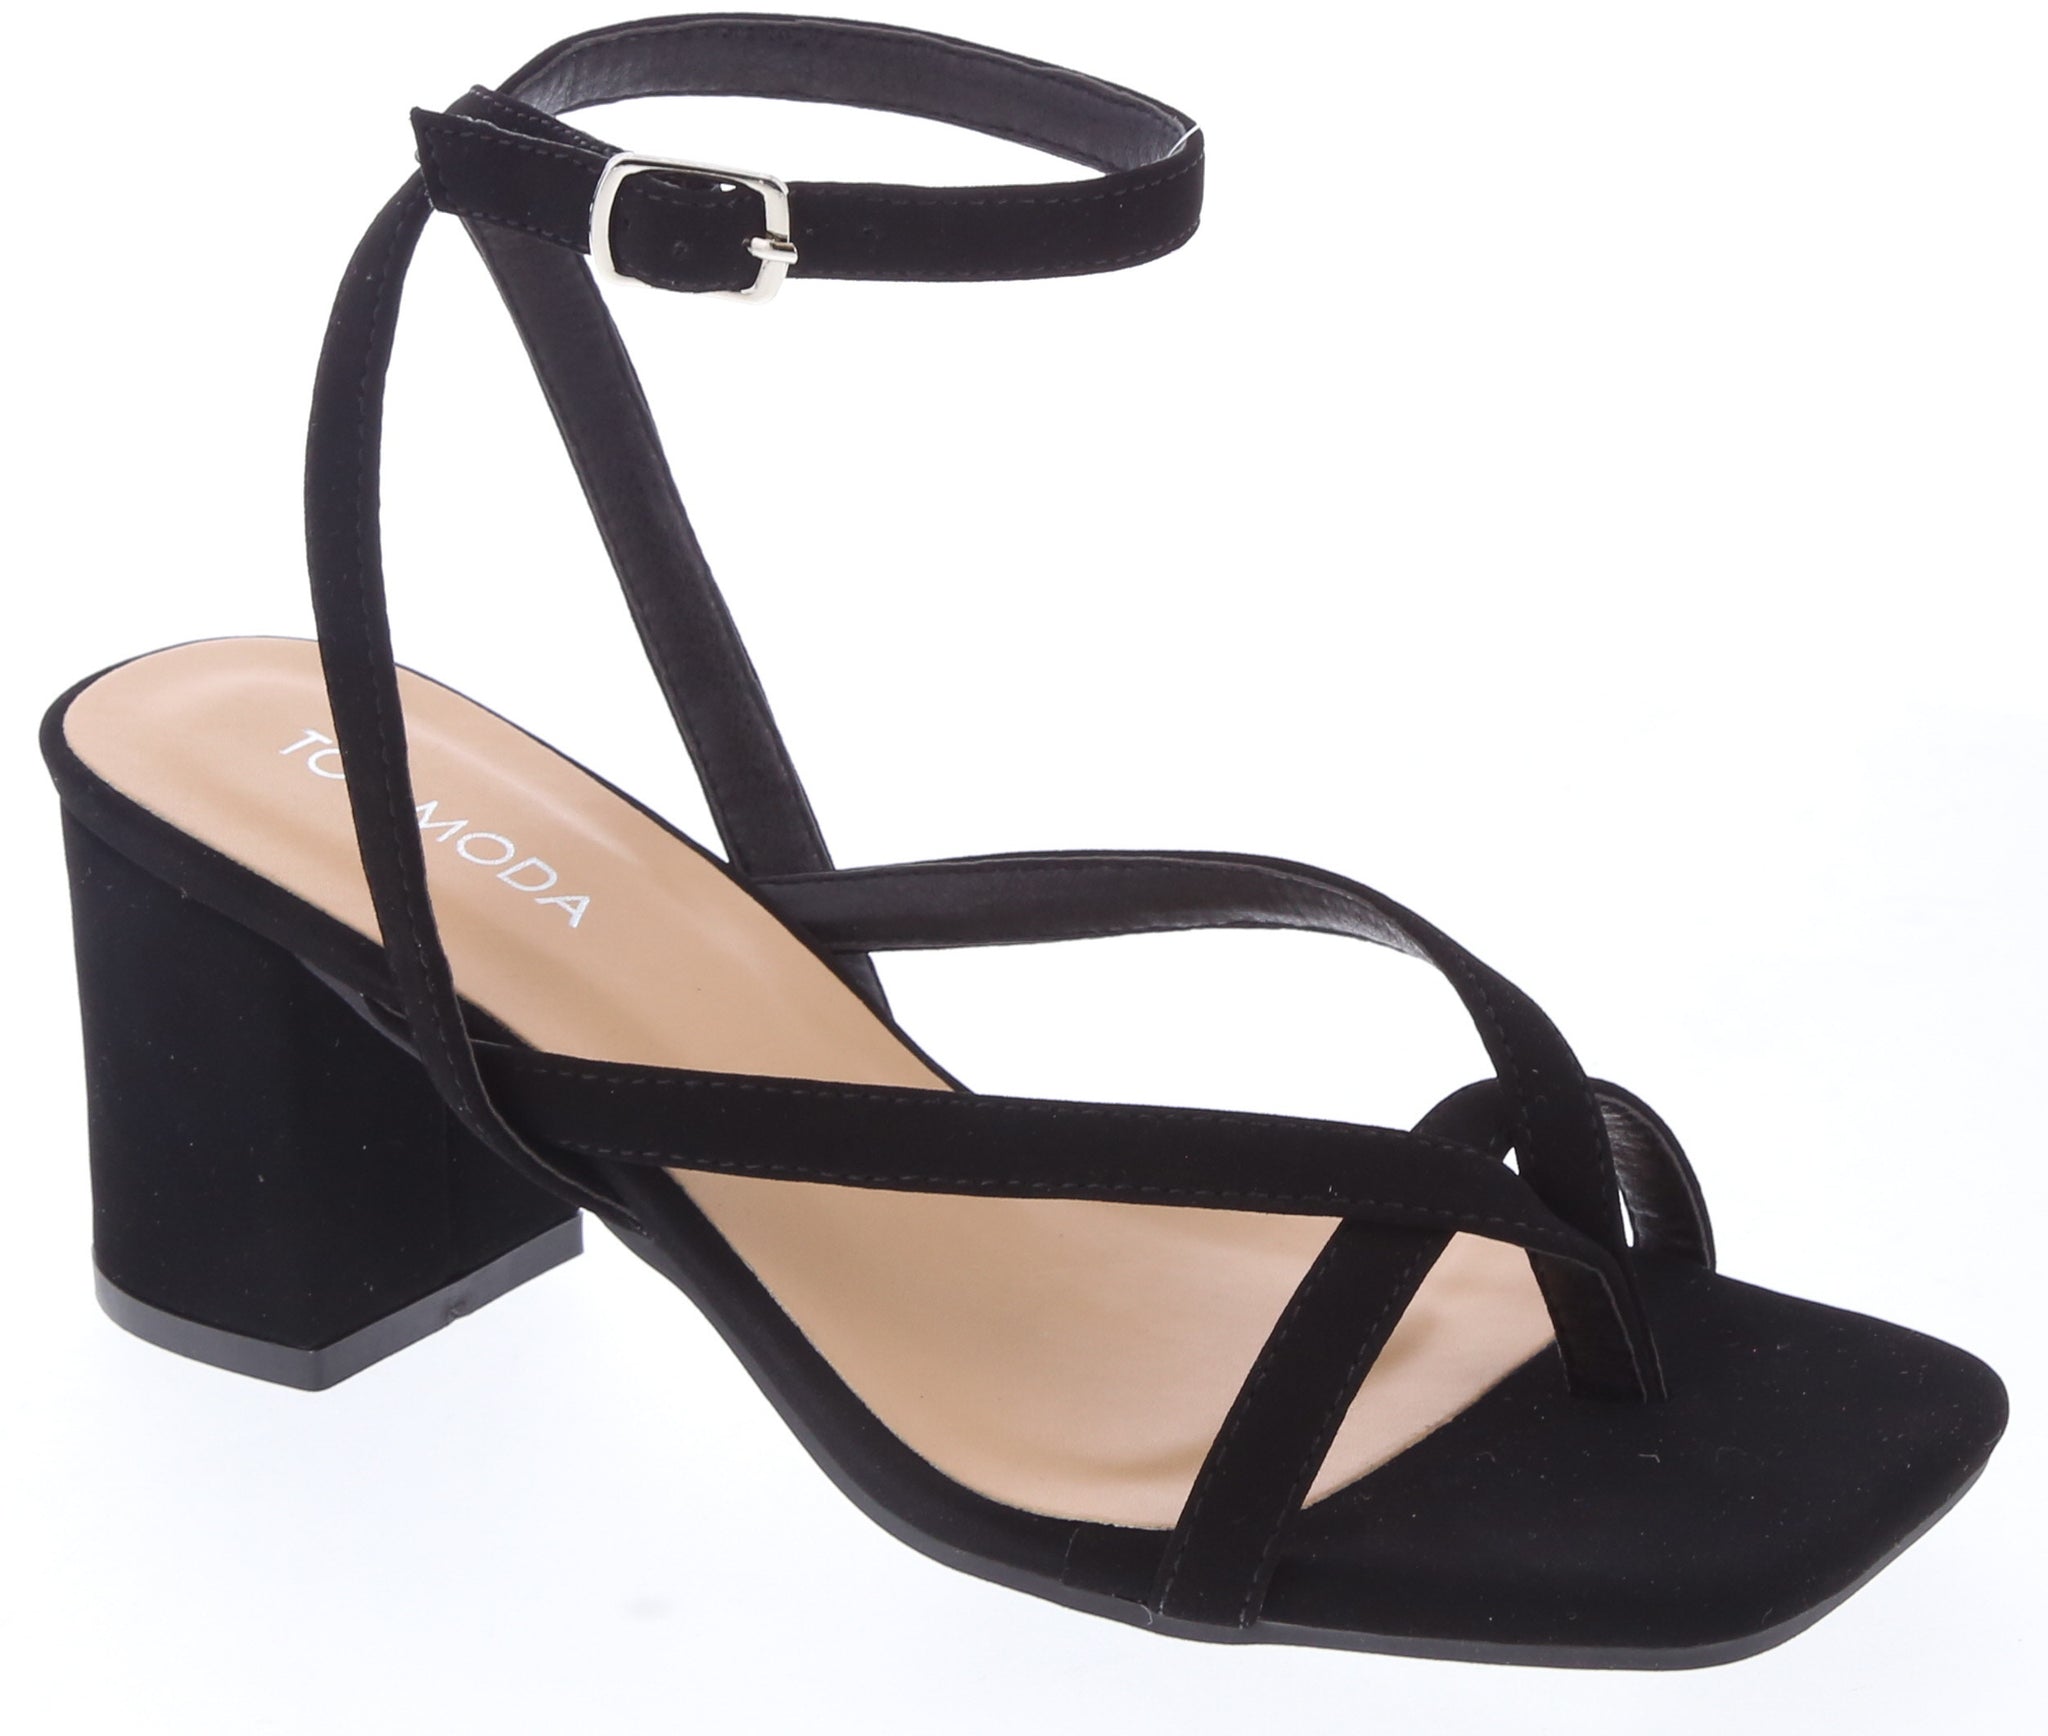 Airbubble Platform Sandal in Black – Melissa Shoes